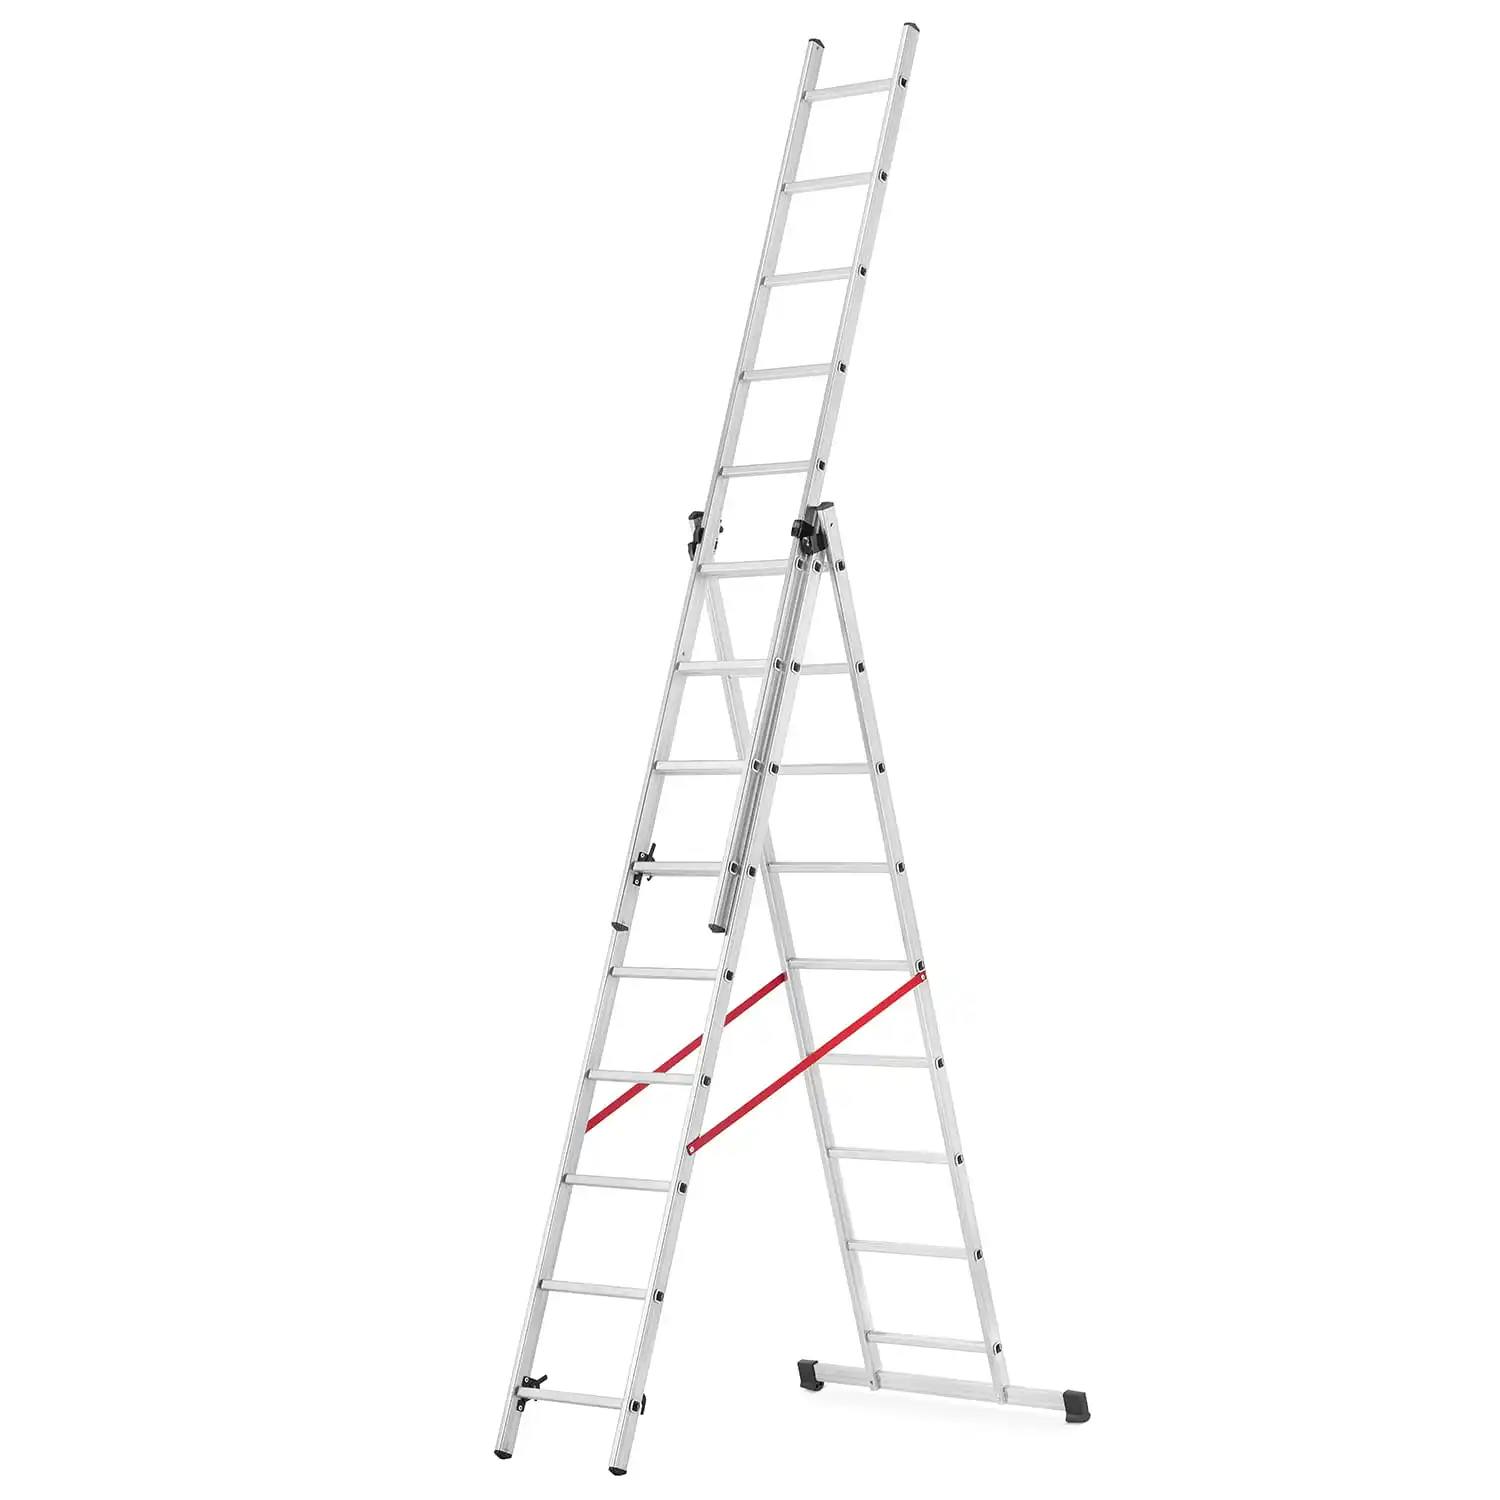 Missie Luchten regel Ladder 3 Section Aluminum 3x9 Higher | Aluminium Industrial Telescopic  Ladder | The Longest 150 Kg Higher Monika - Buy Lader Ladder Telescopic  Extension Ladders 3 Section,3x9 3-9 3*9 3 Section 9